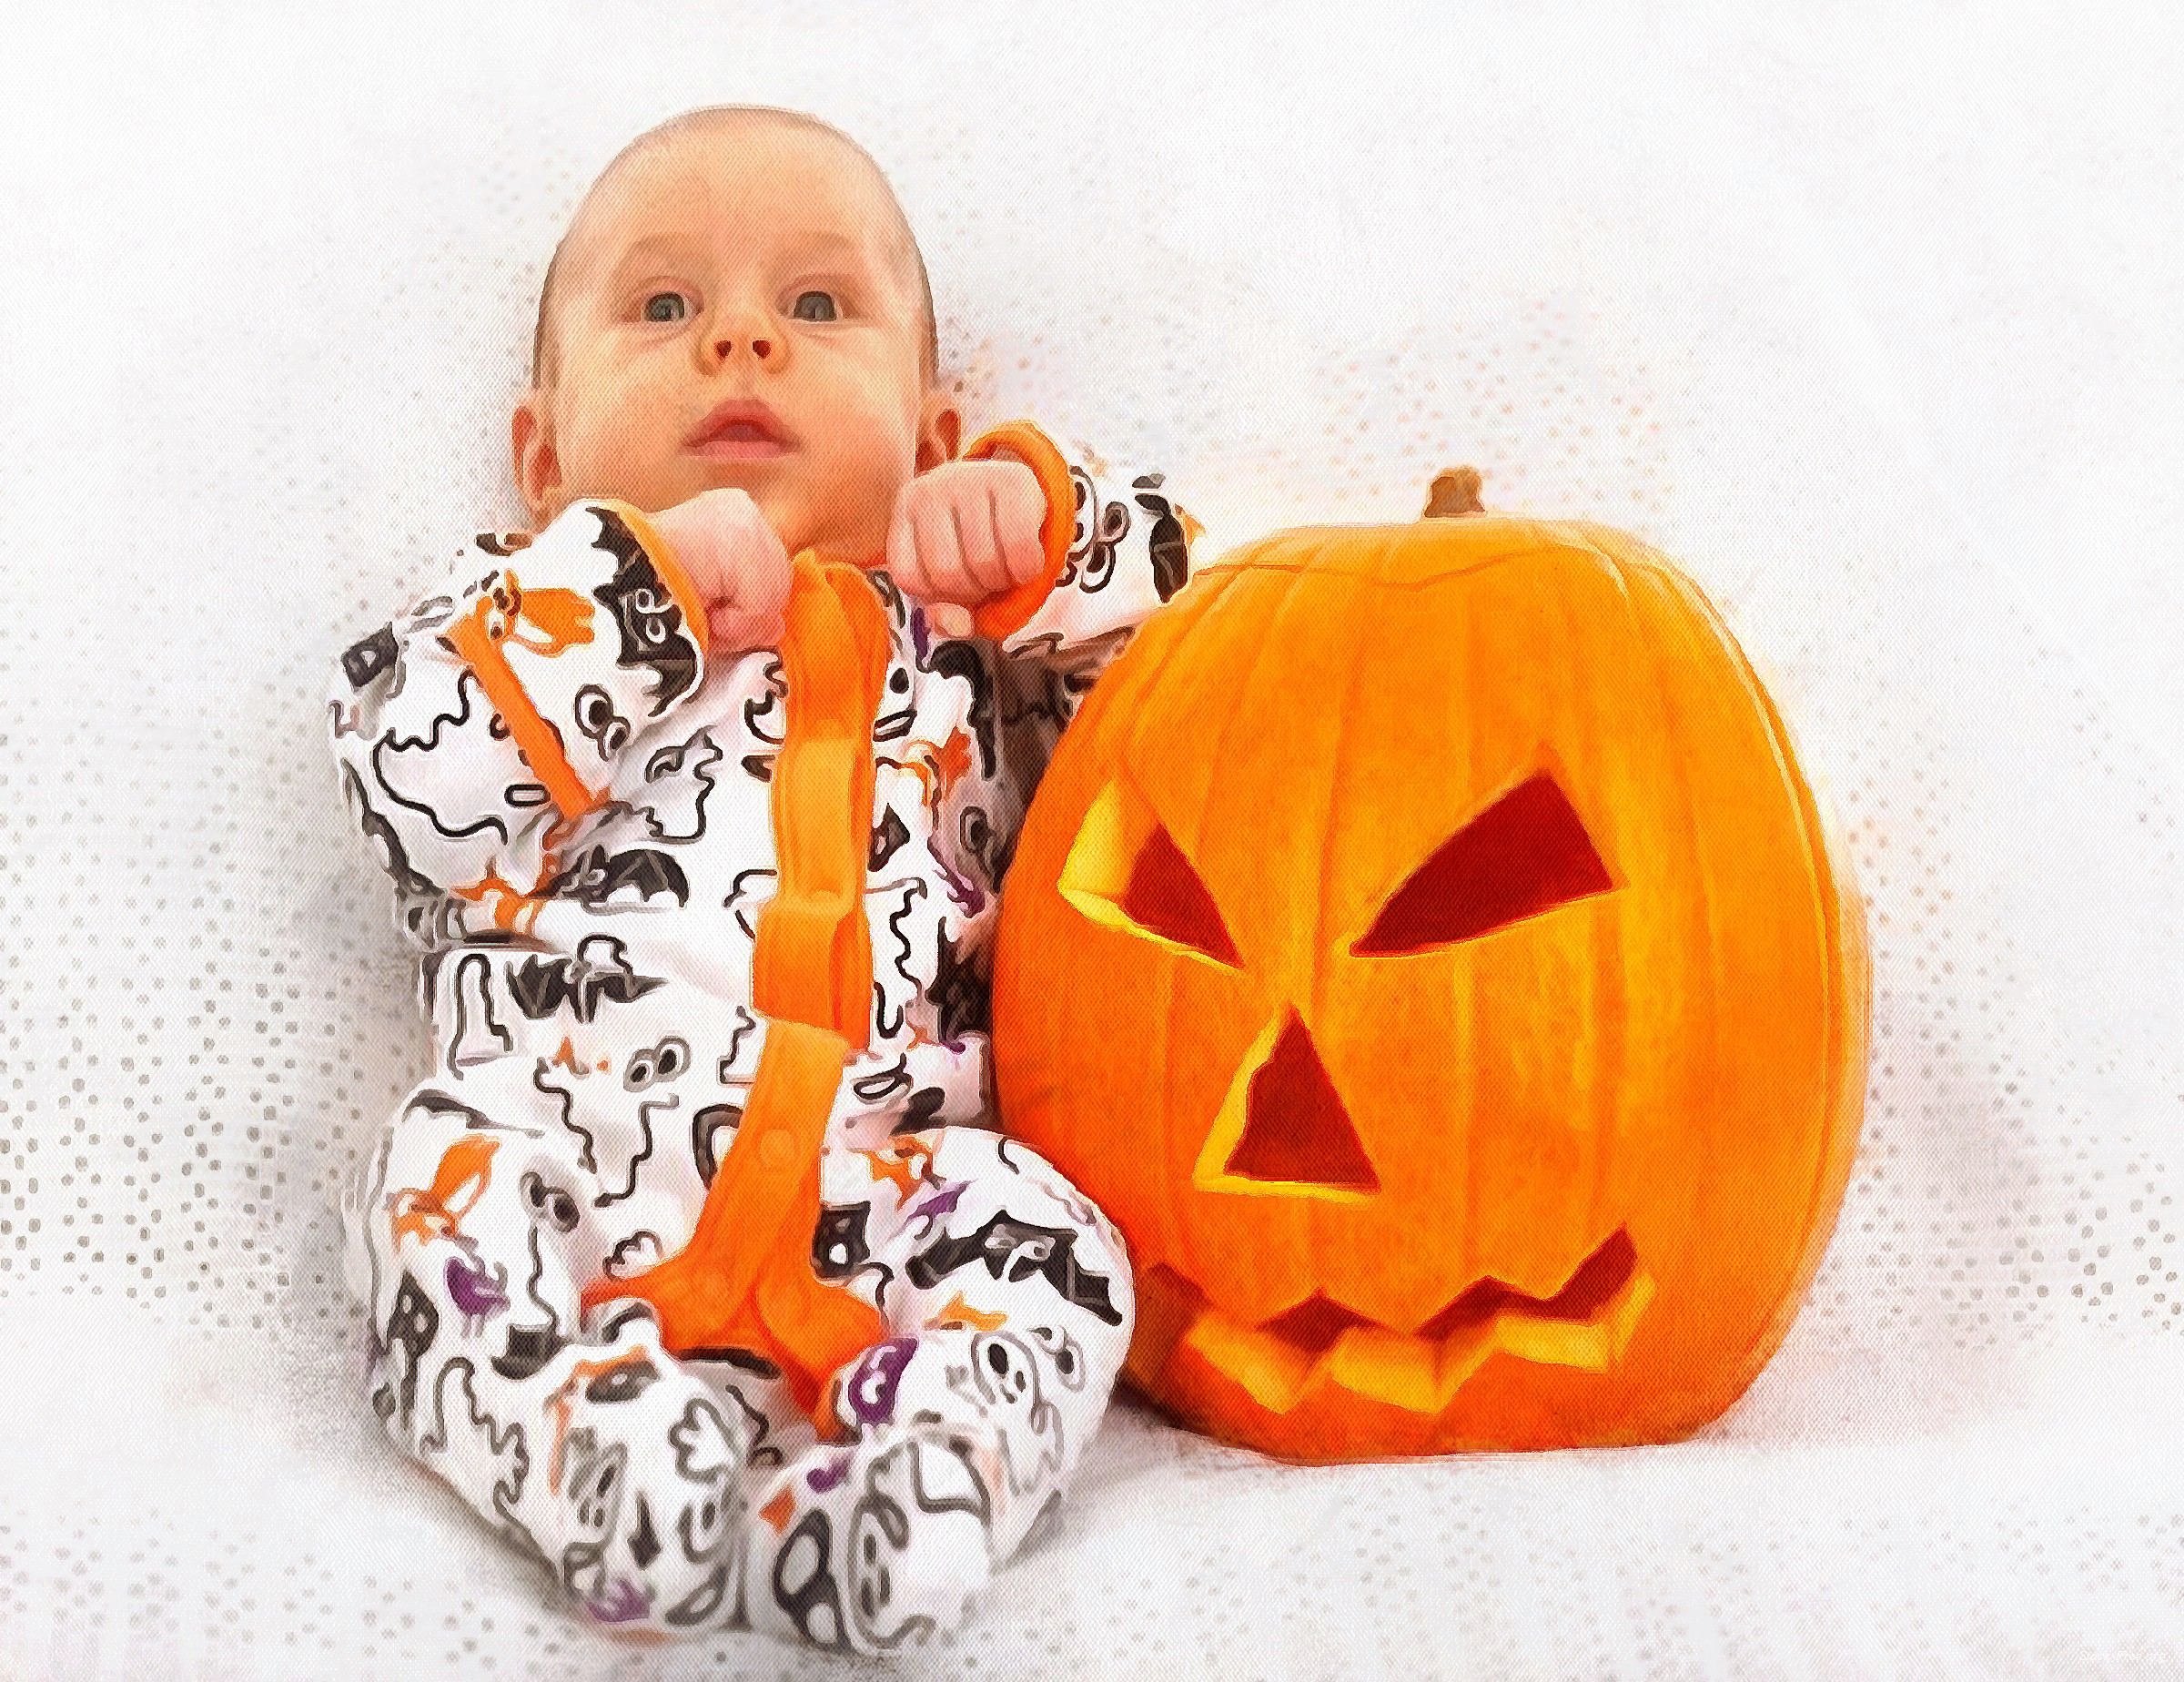 child, holiday, pumpkin, - Halloween Free Image, Free Images, Public Domain images, Stock Free Images, Download Image for Free, Halloween Stock Free Images!